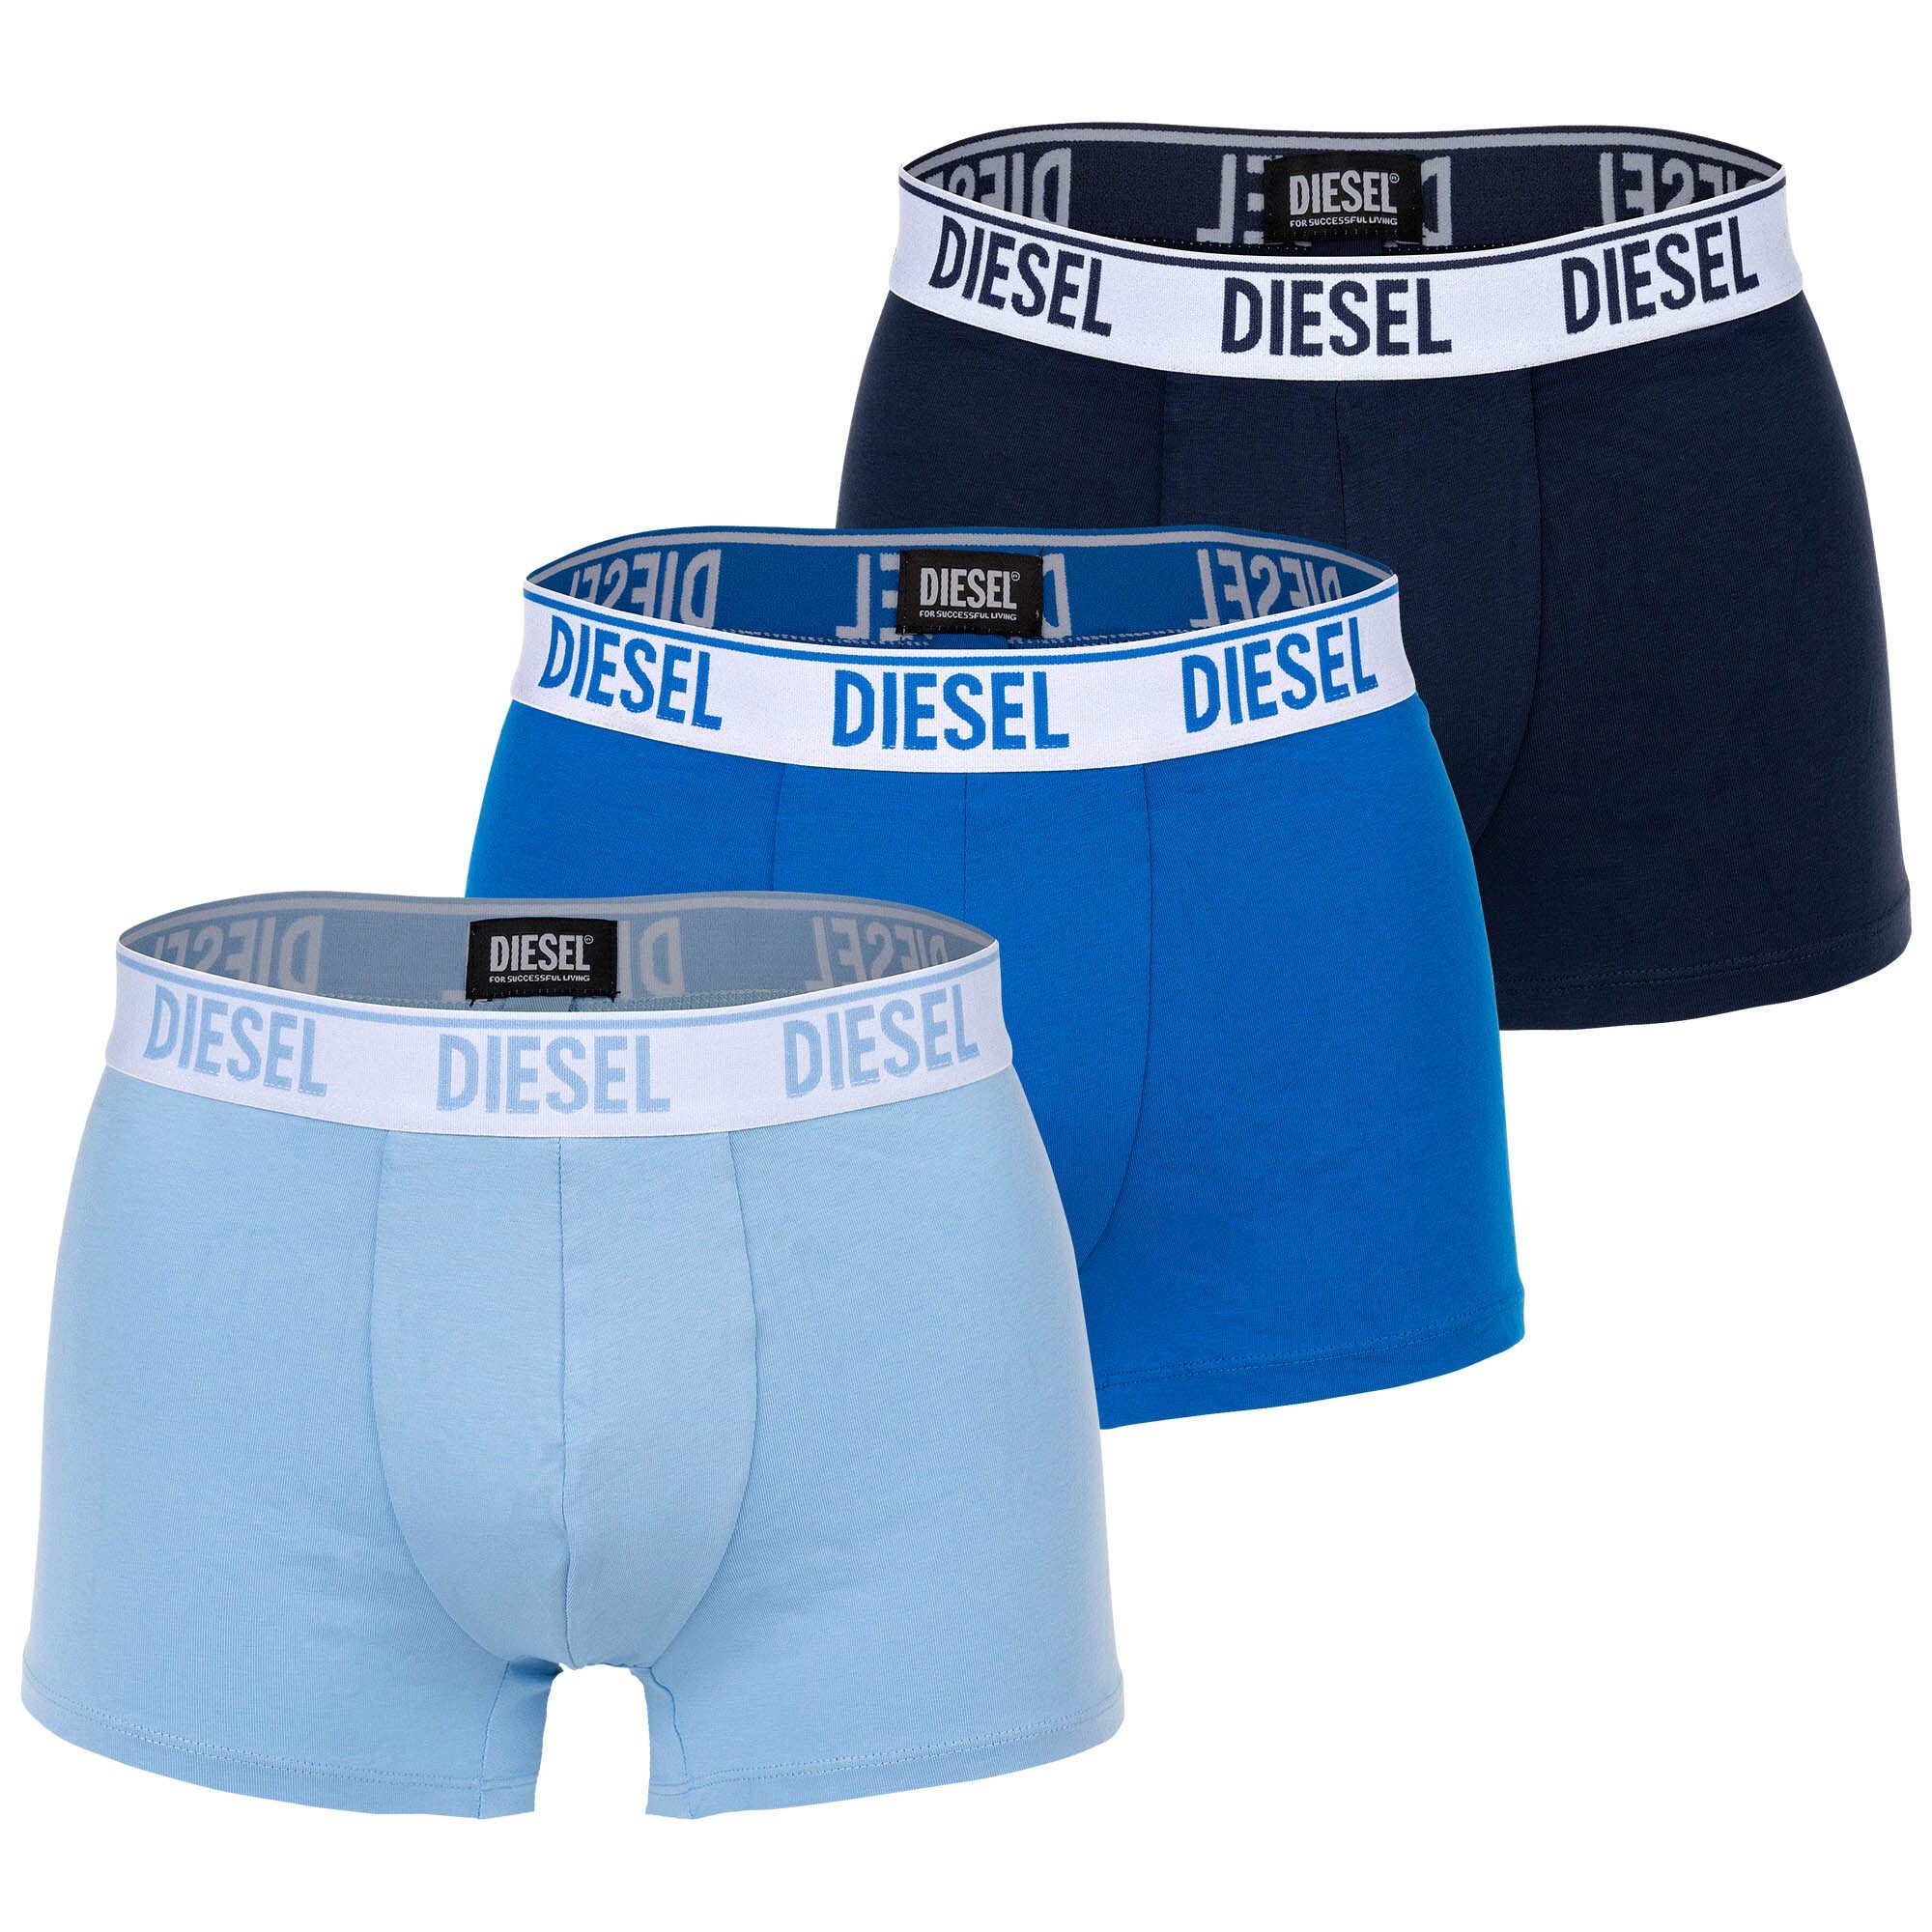 Diesel Boxer Herren 3er Pack Dunkelblau/Blau Boxershorts, 